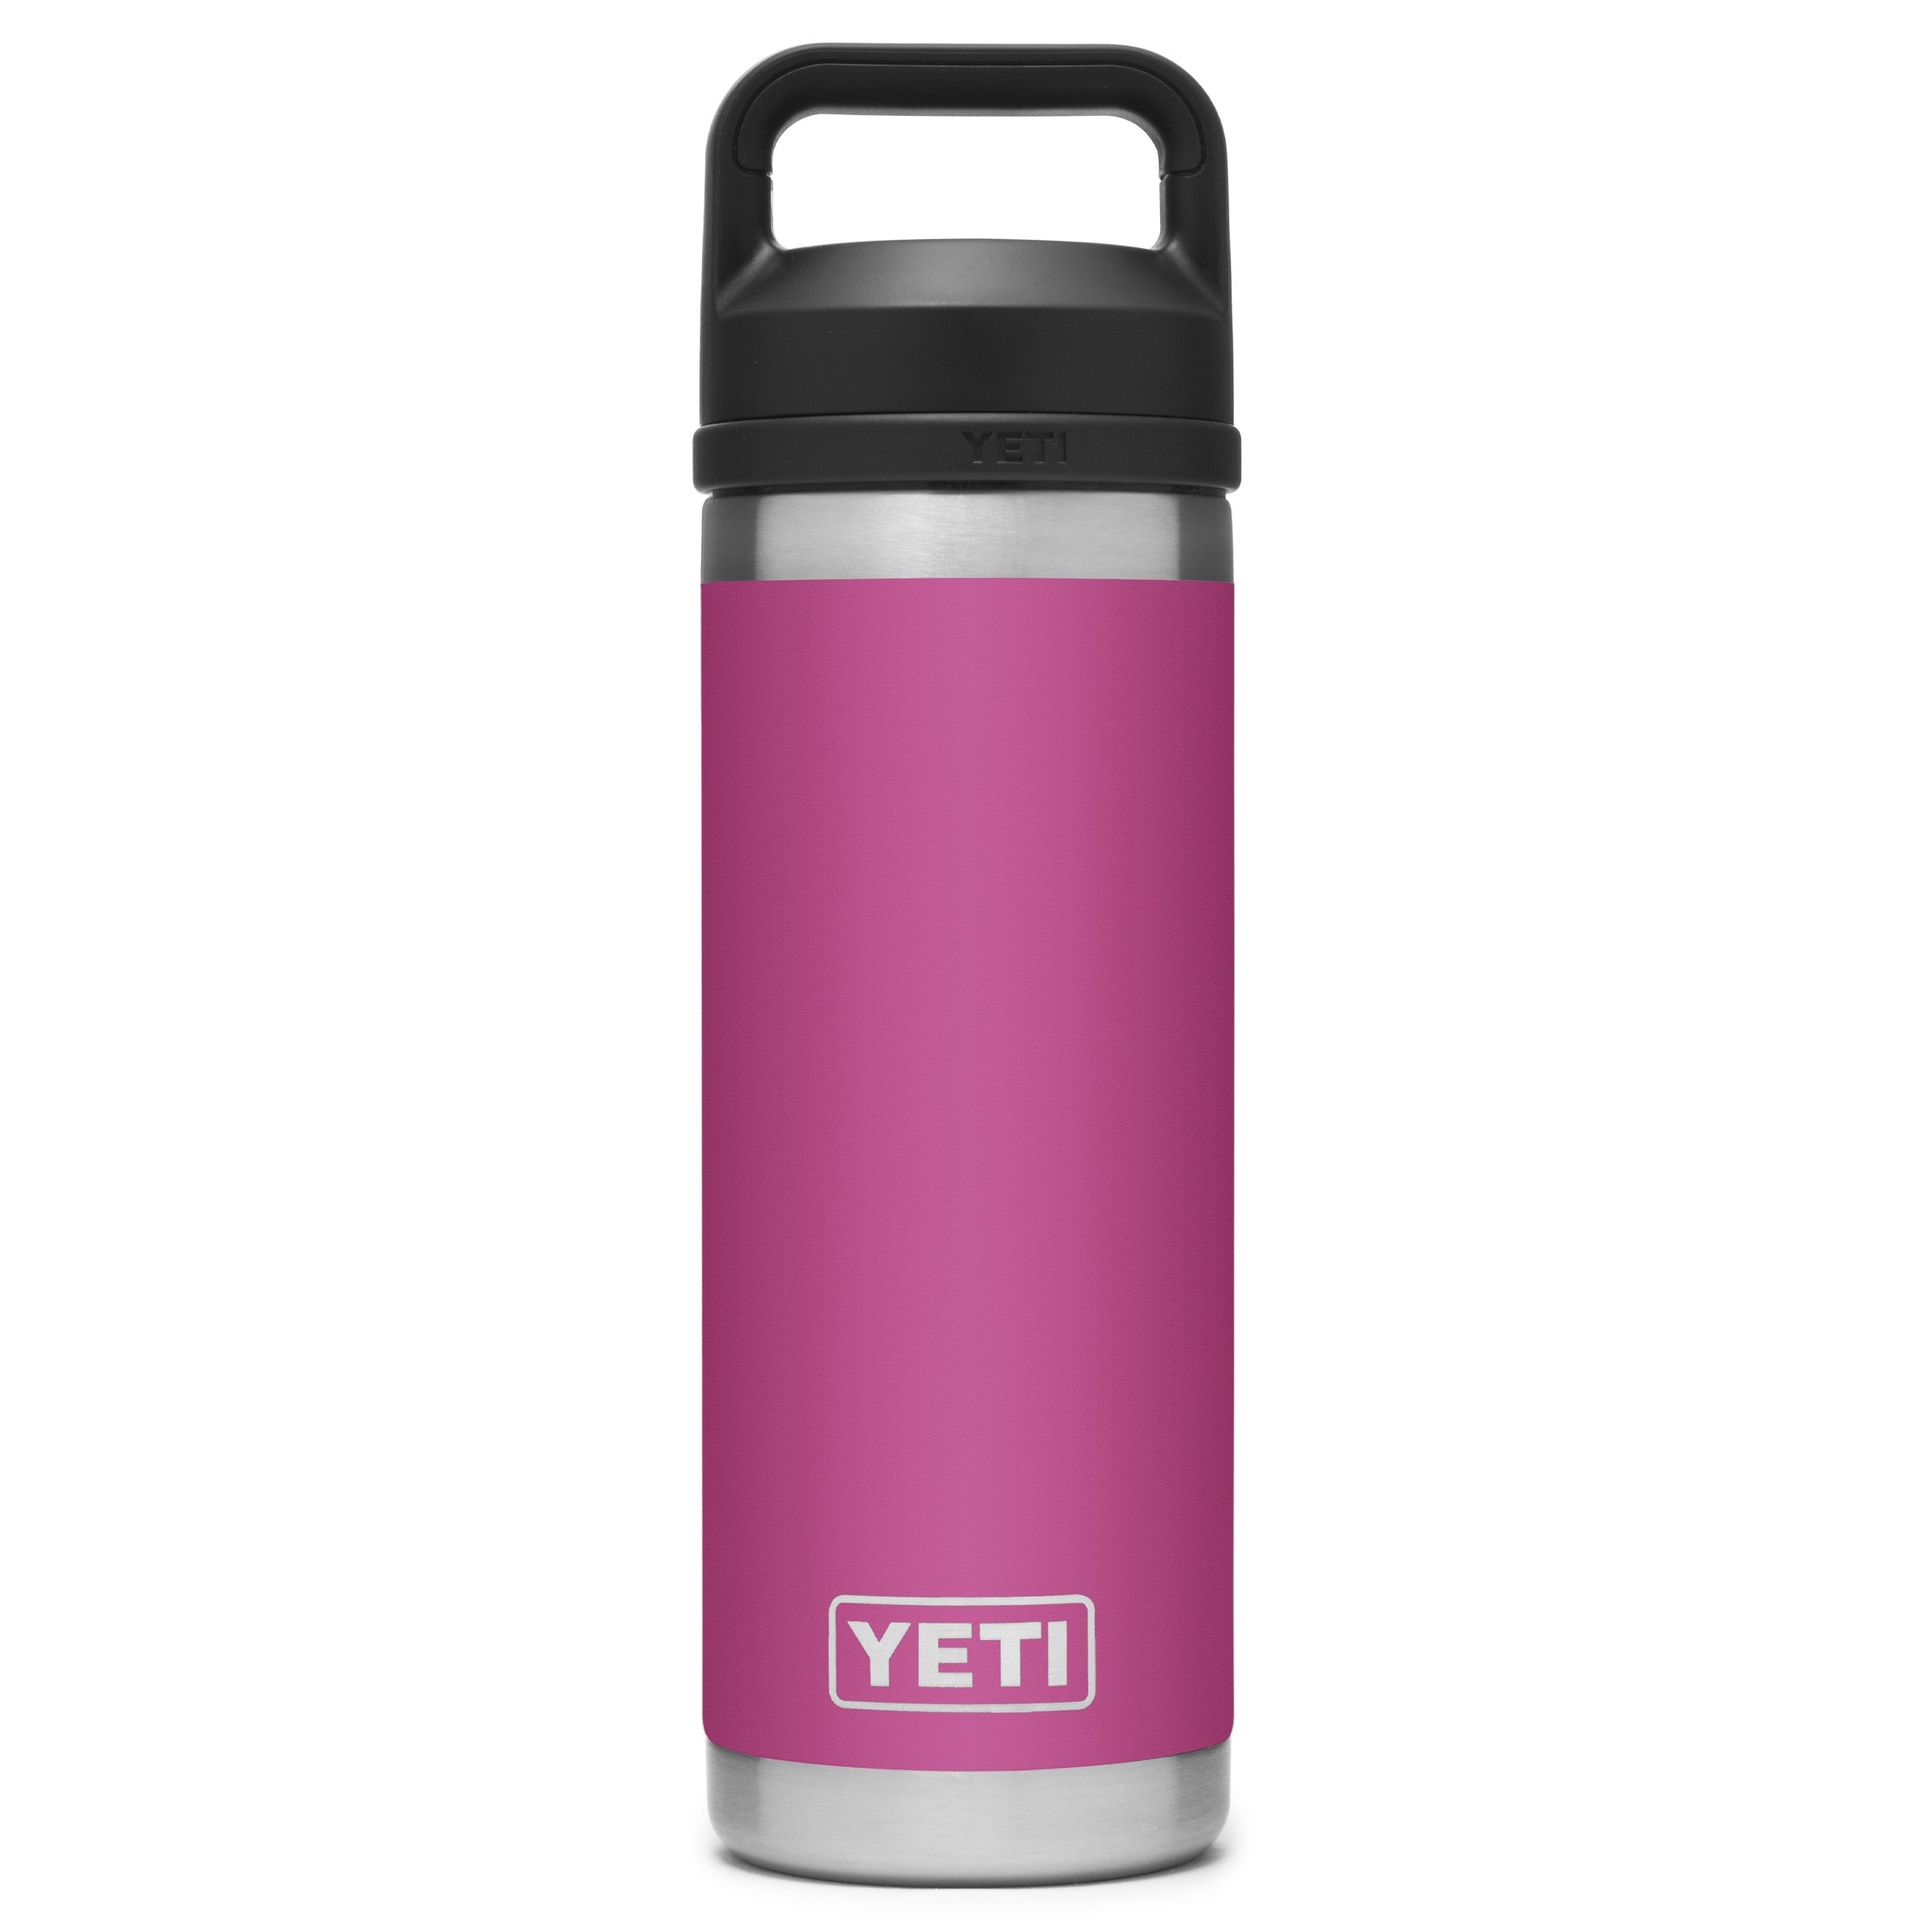 Yeti Rambler 18 oz Bottle with Chug Cap - Power Pink